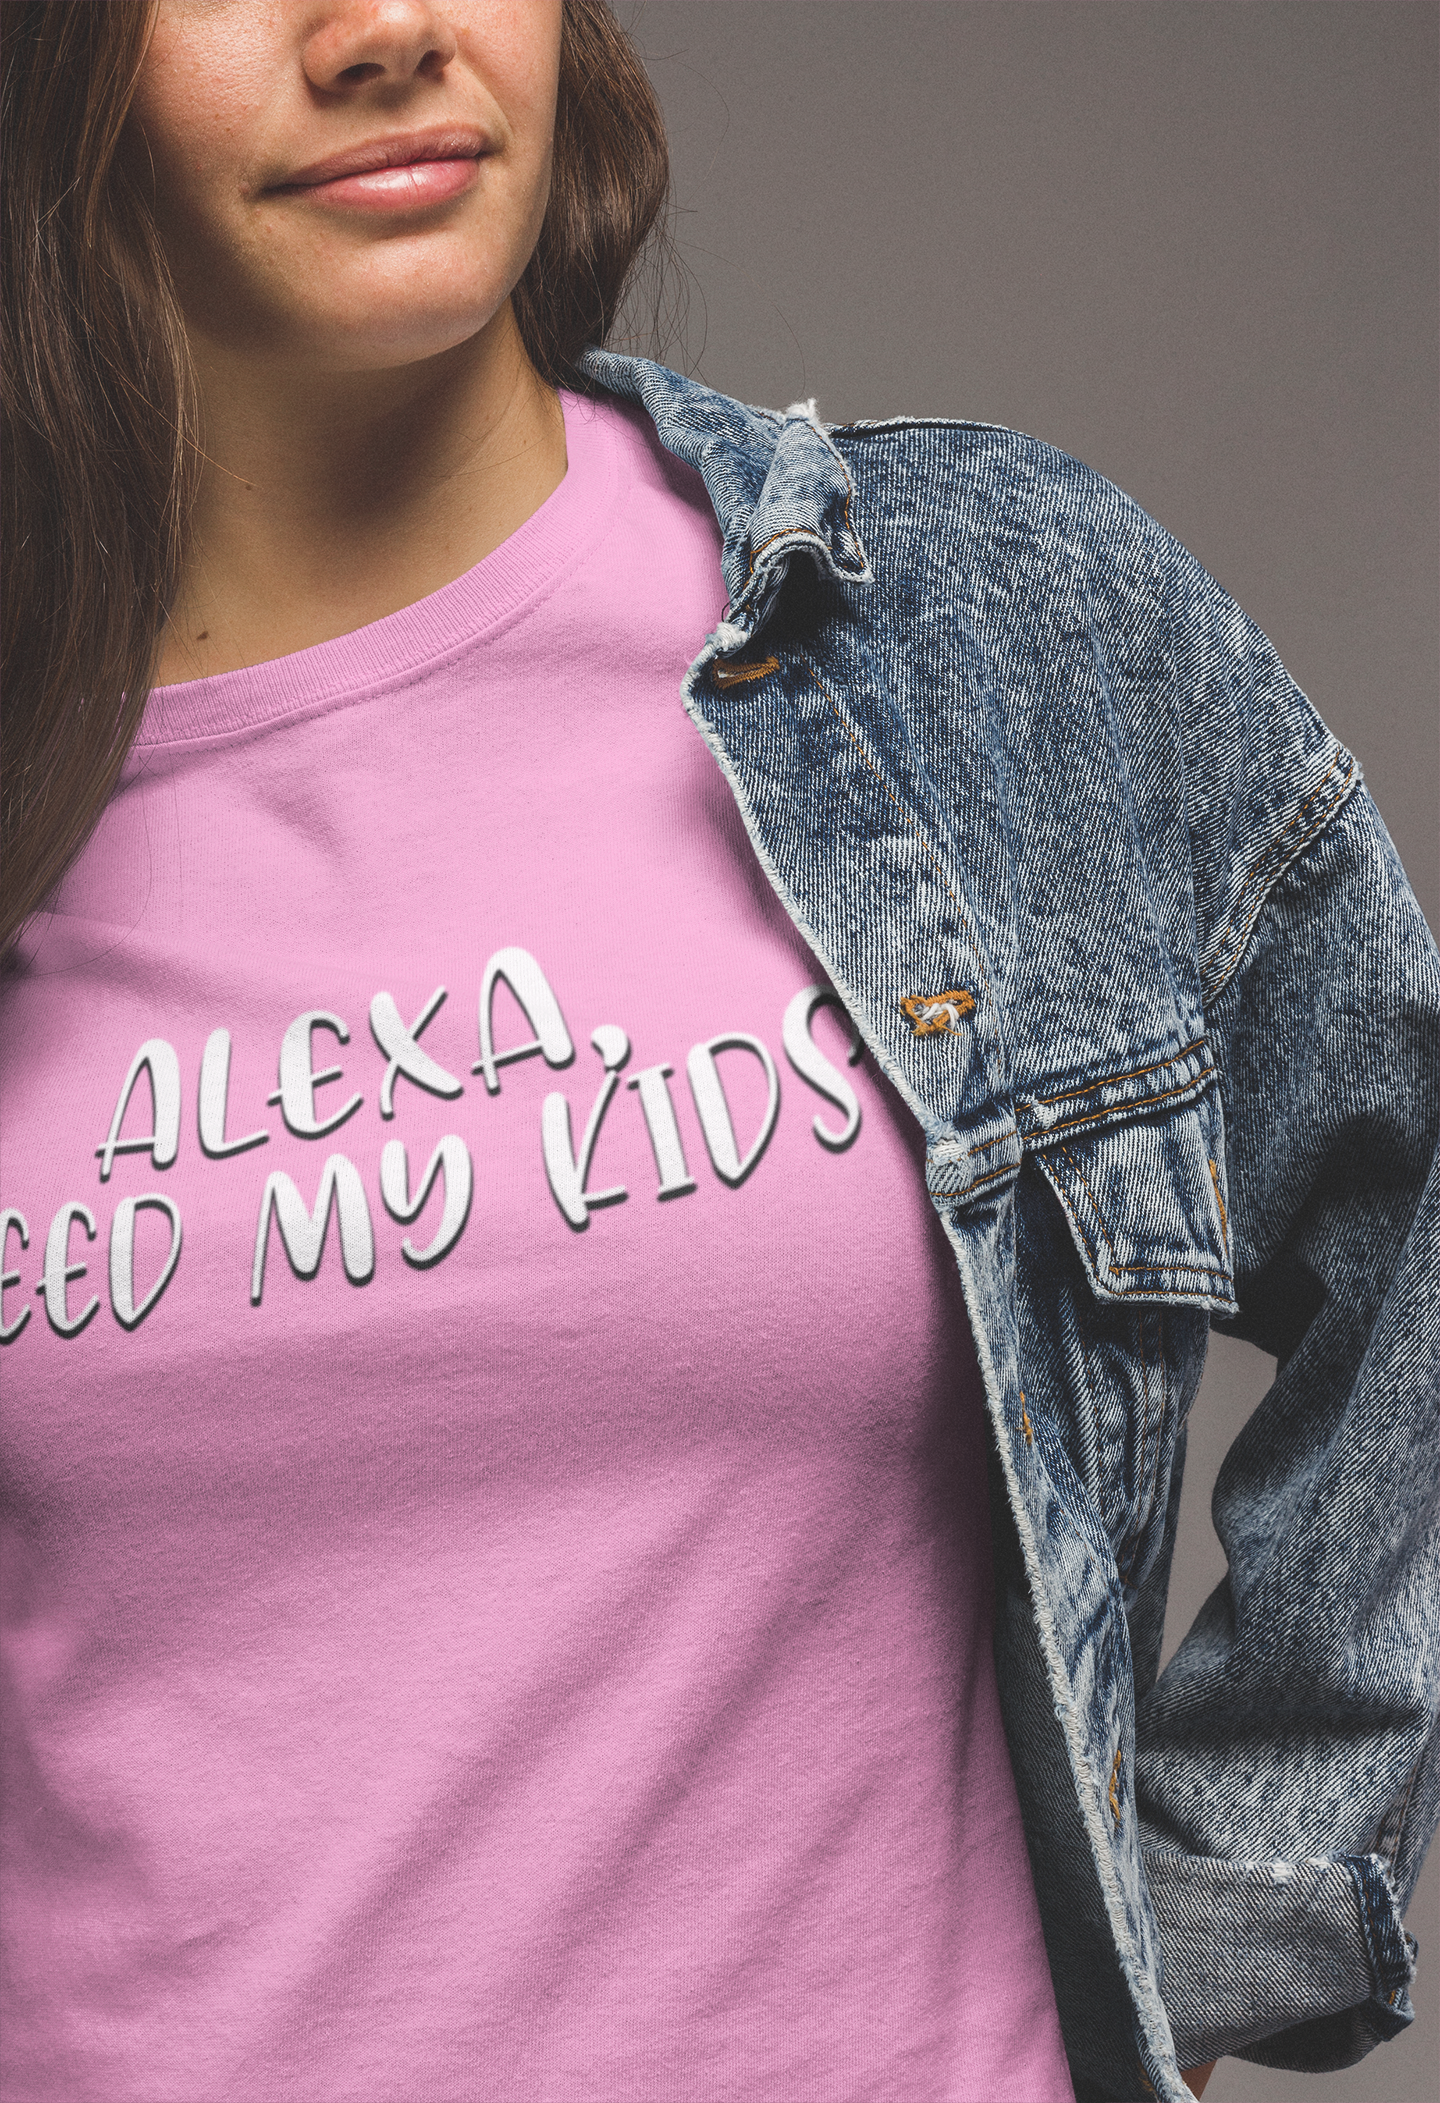 ALEXA, FEED MY KIDS